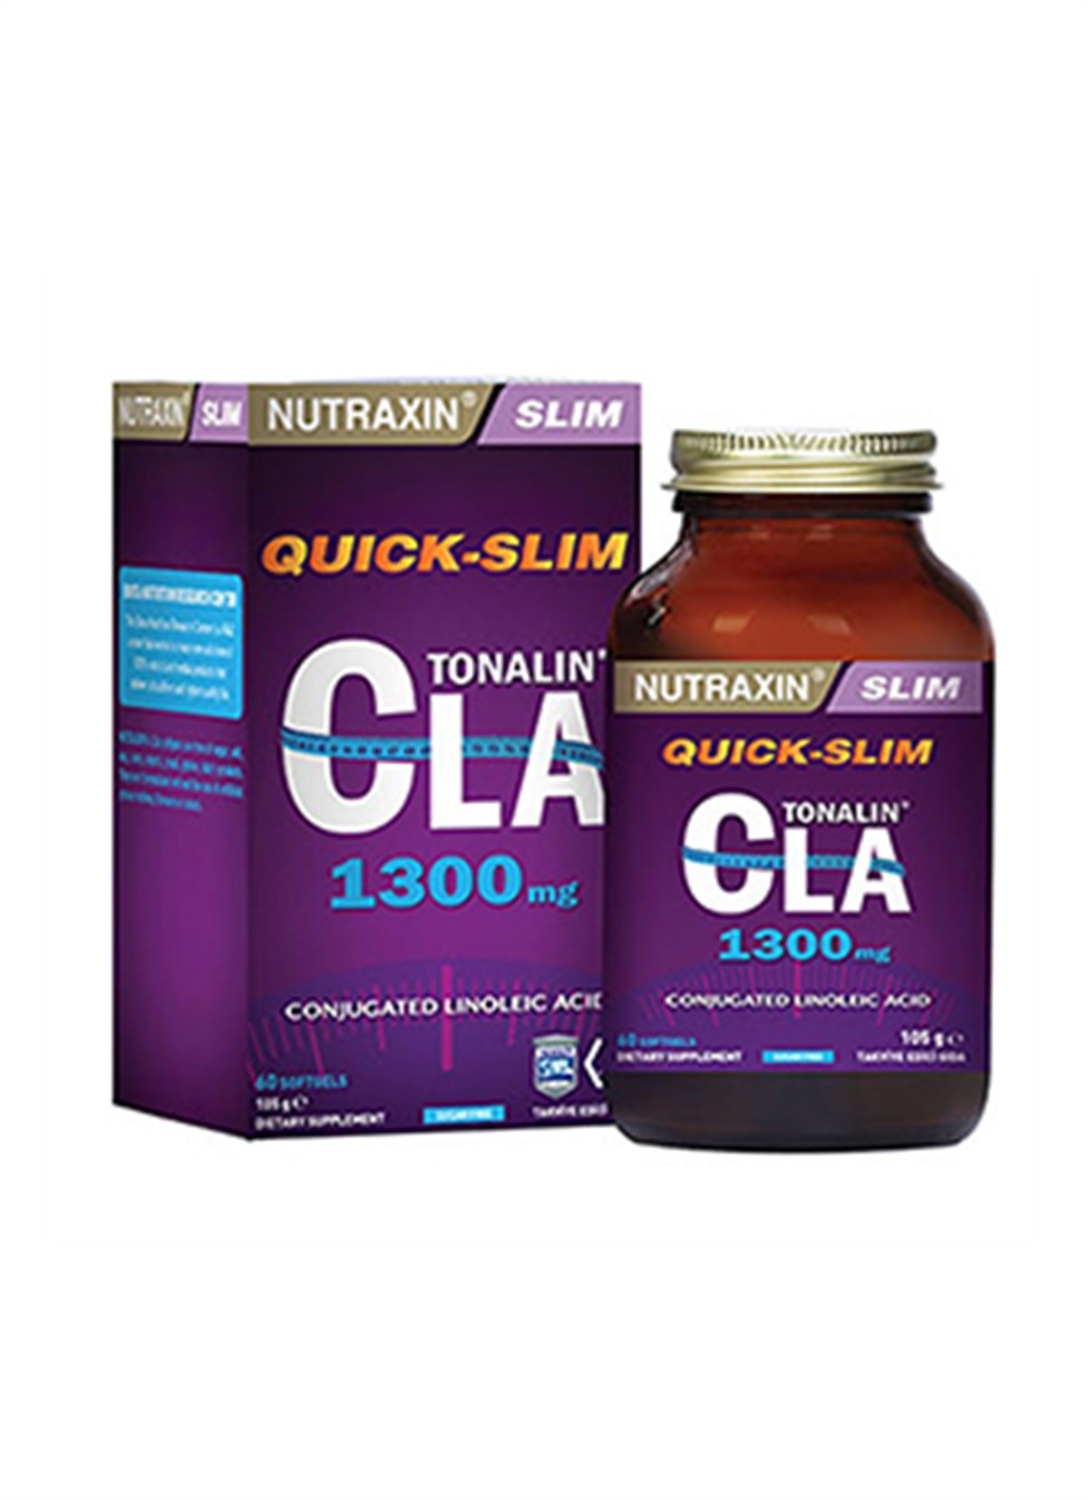 Nutraxin Quick Slim Tonalin Cla 1300 мг 60 капсул